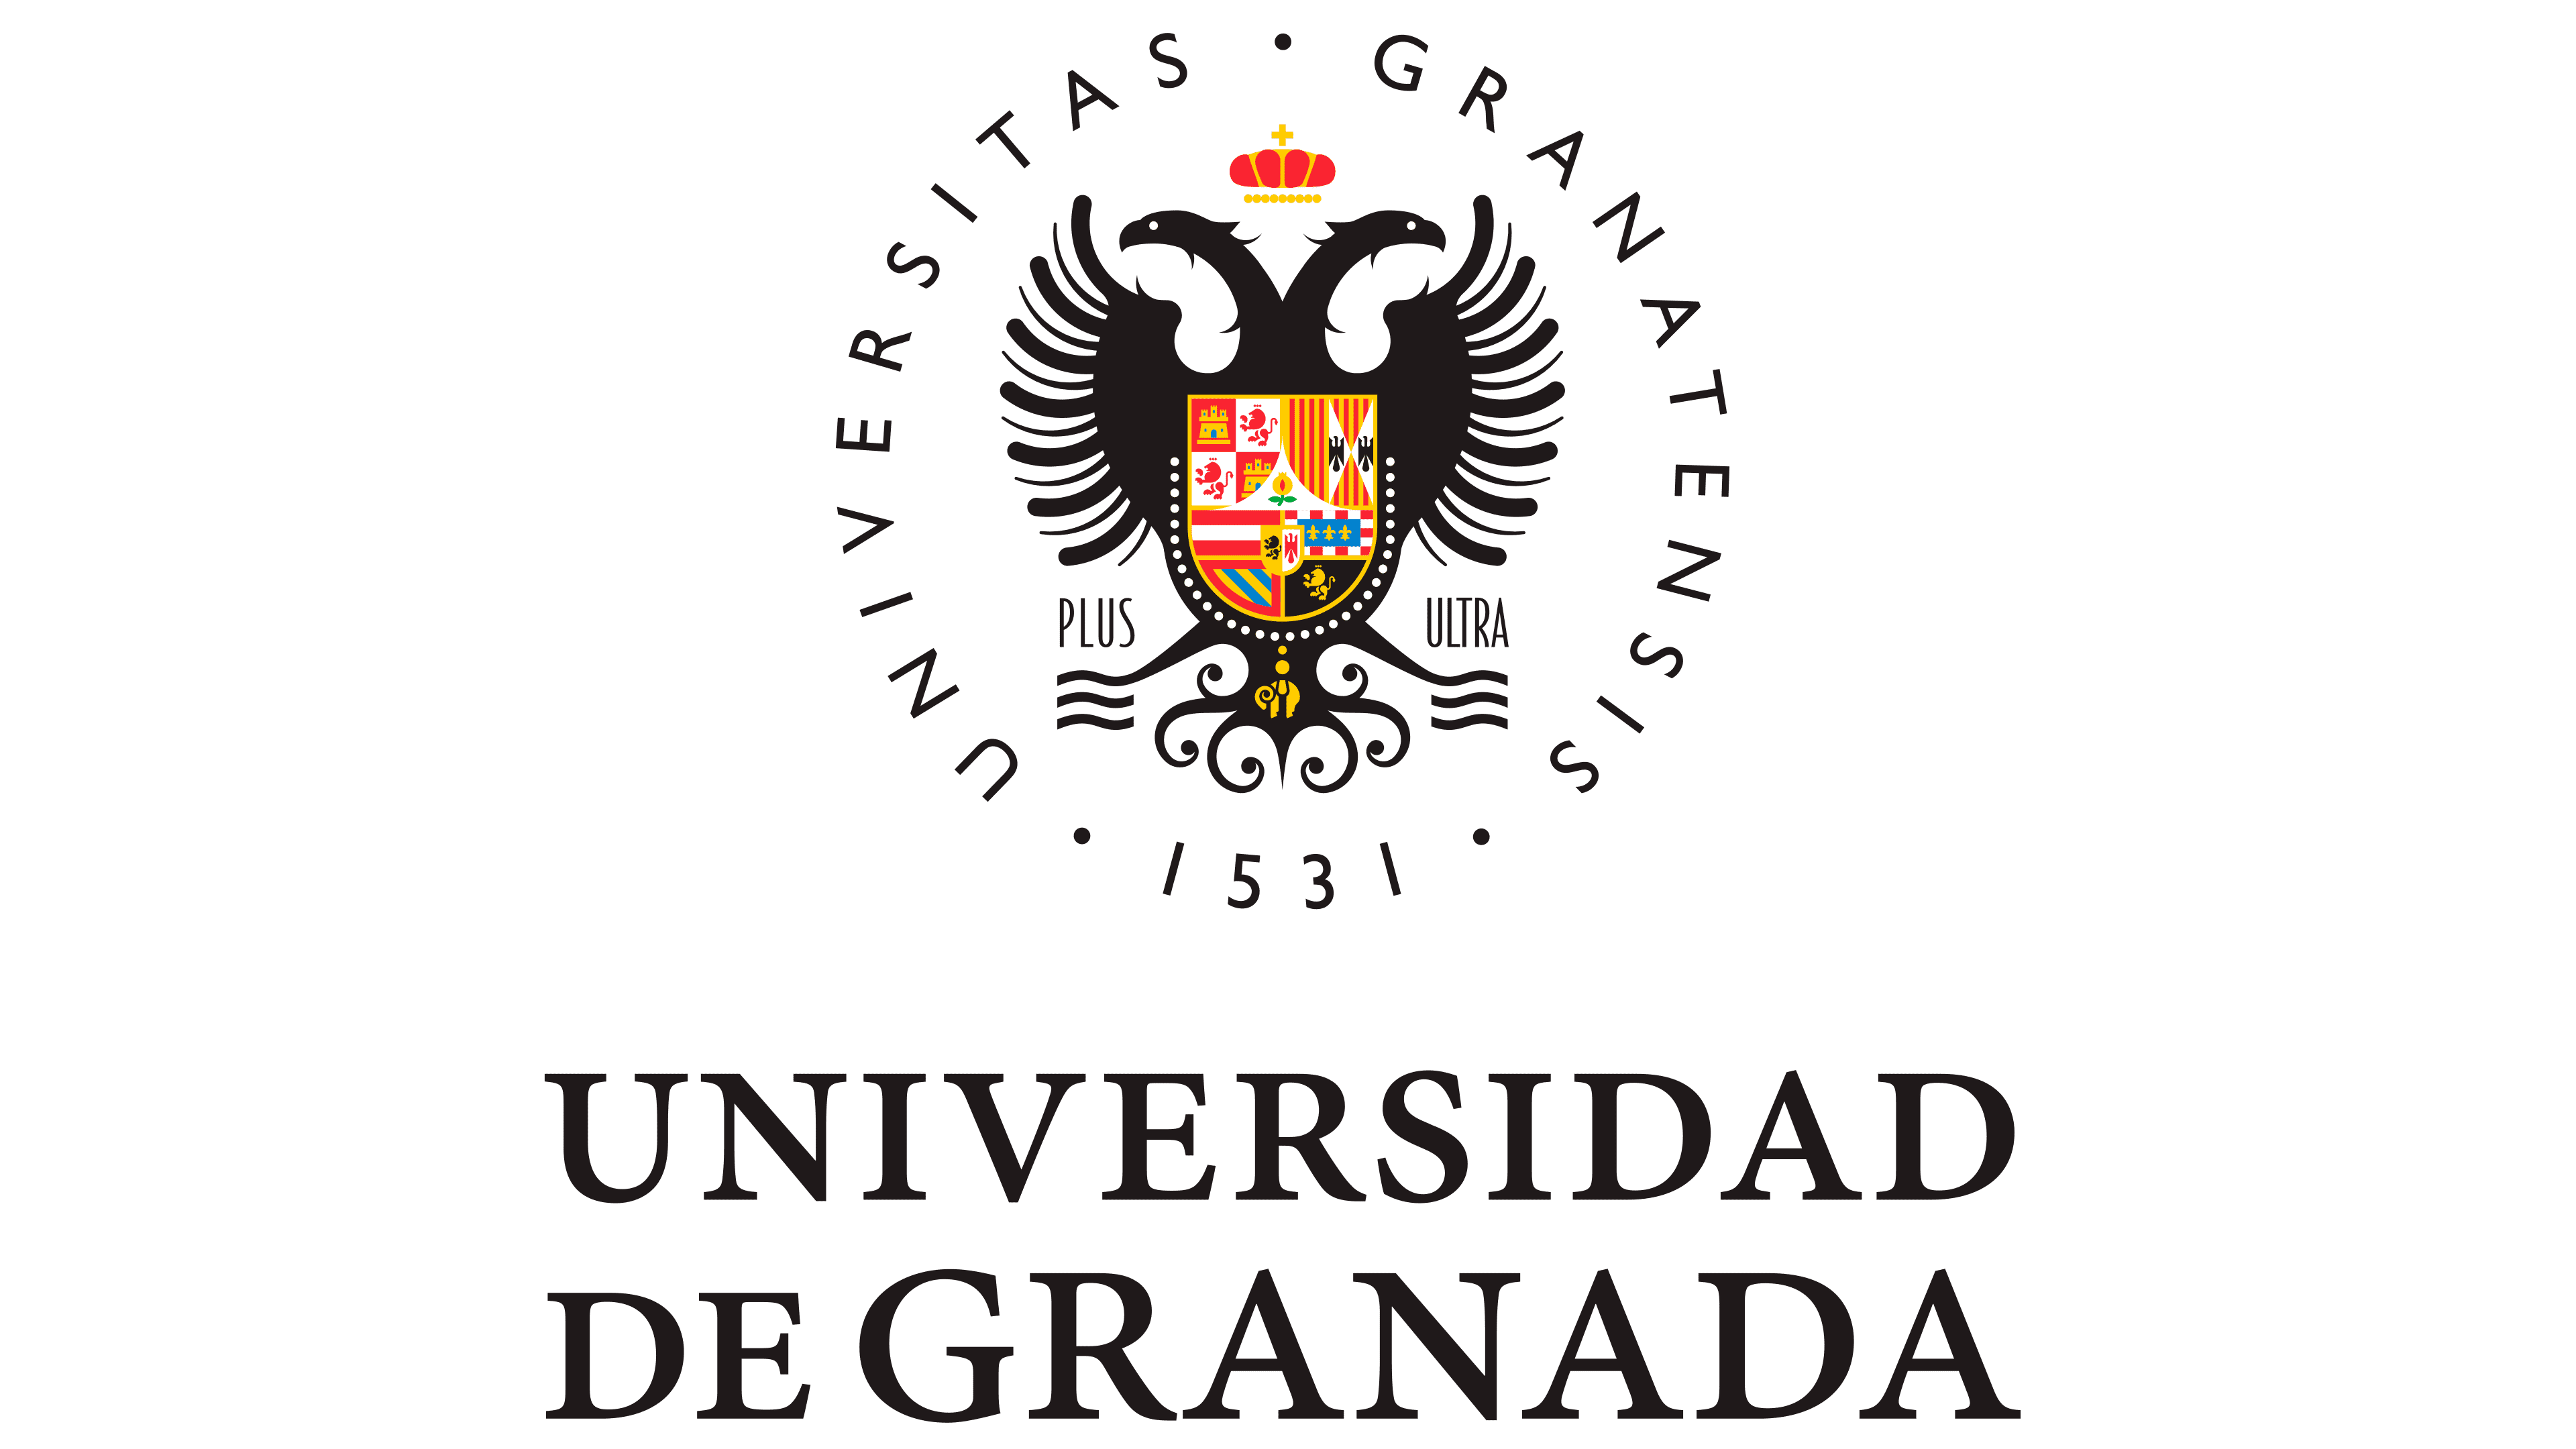 Erasmus+ international credit mobility_ PhD students (3 months) from Ain Shams University to Granada University, Spain